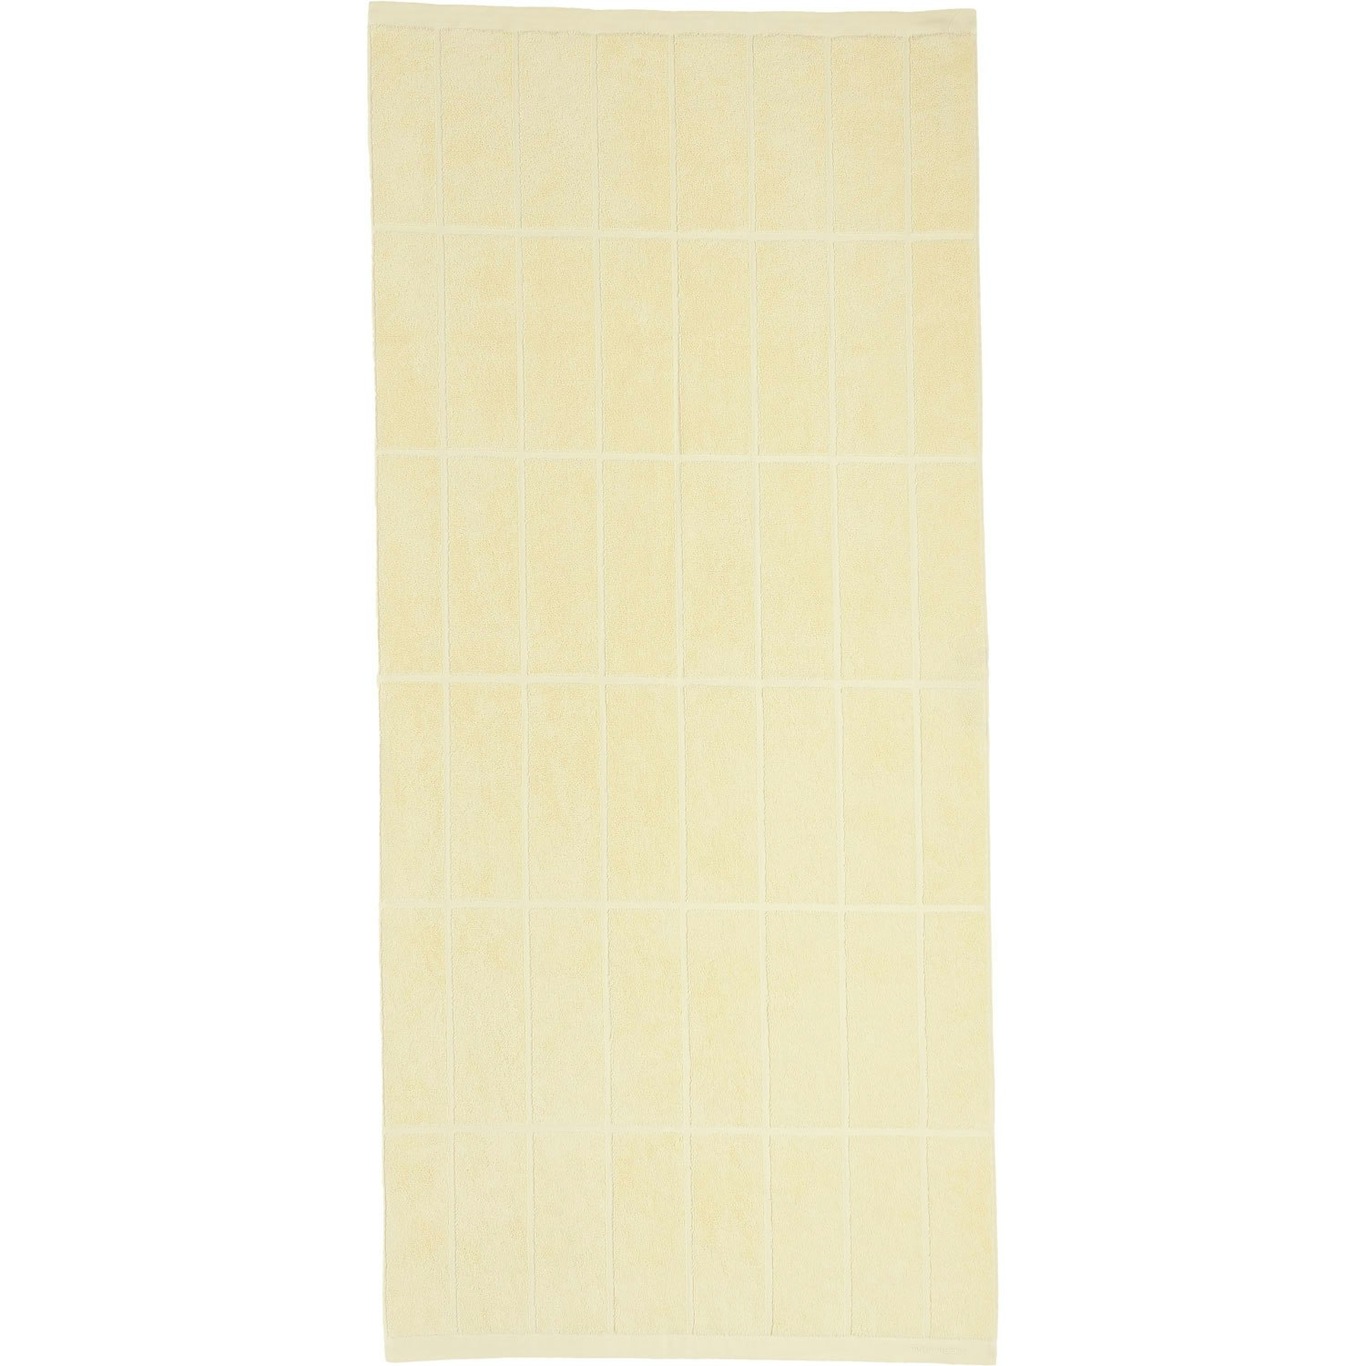 Tiiliskivi Towel 70x150 cm, Butter Yellow